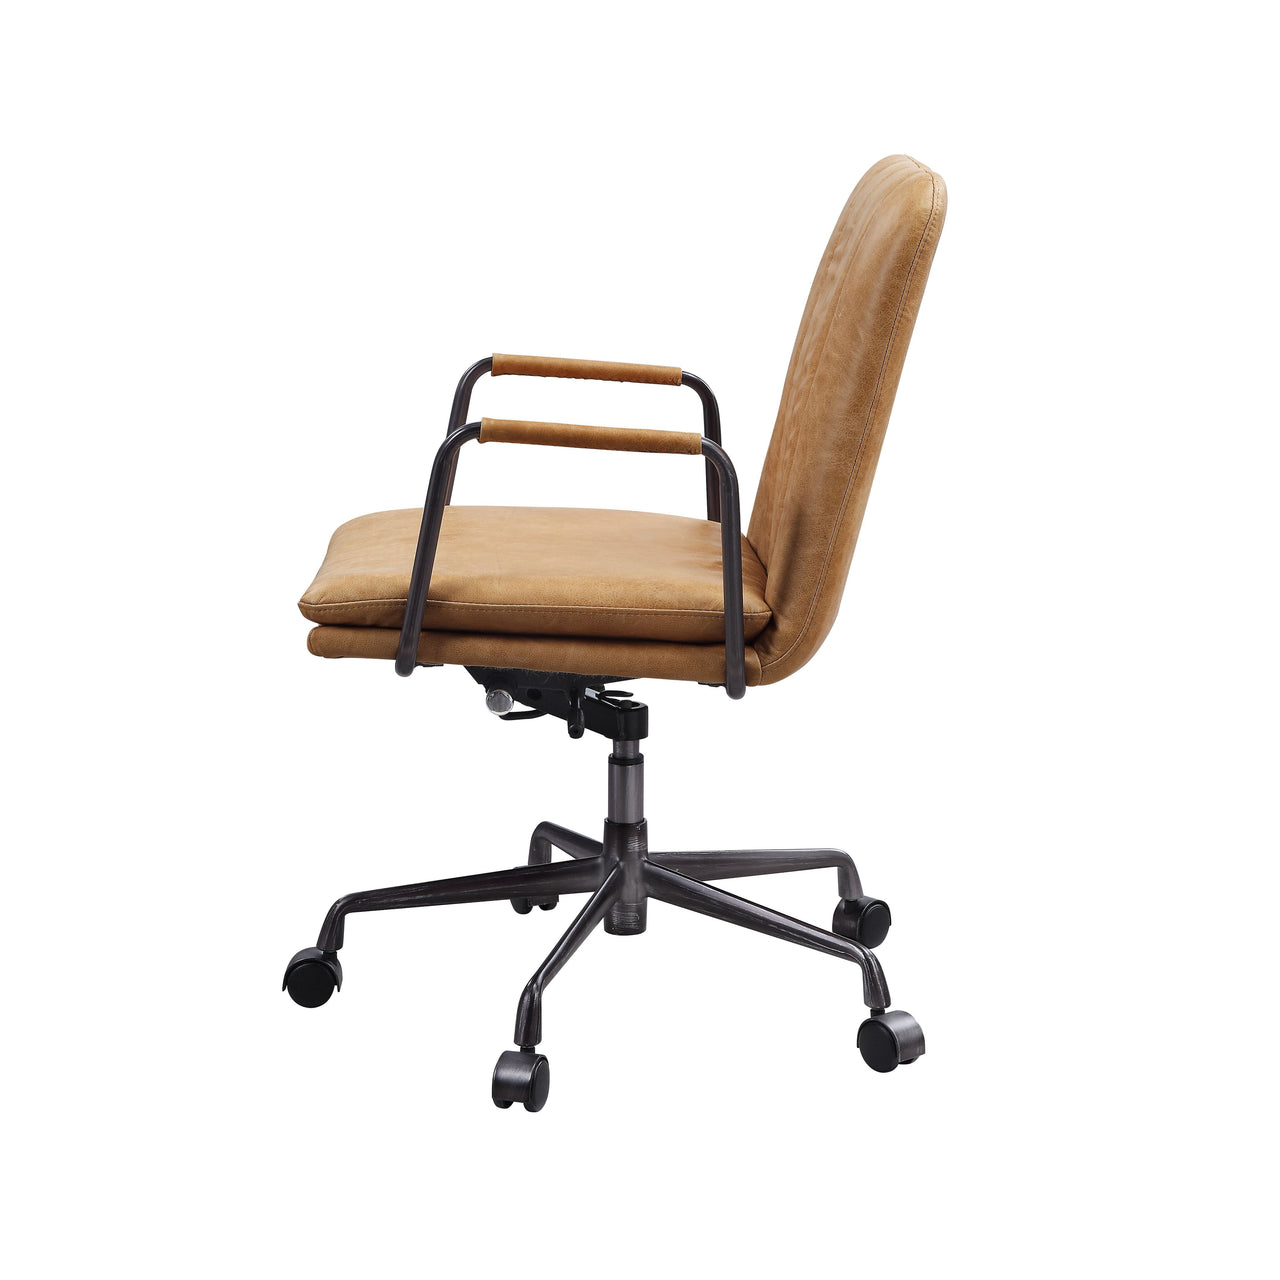 Eclarn - Office Chair - Tony's Home Furnishings